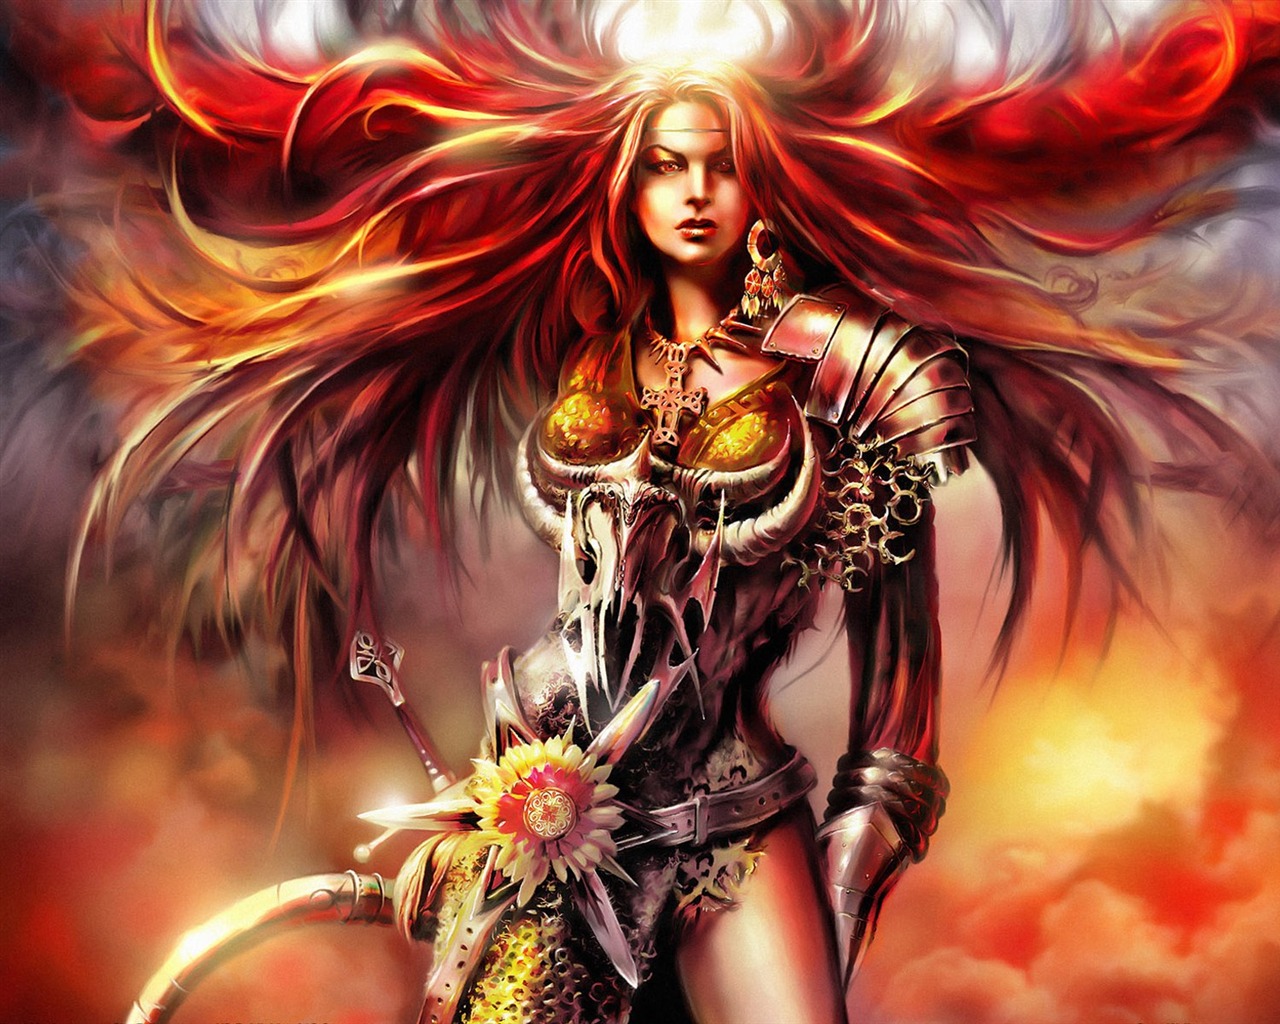 Belles femmes illustrateur fantasy fond d'écran #26 - 1280x1024